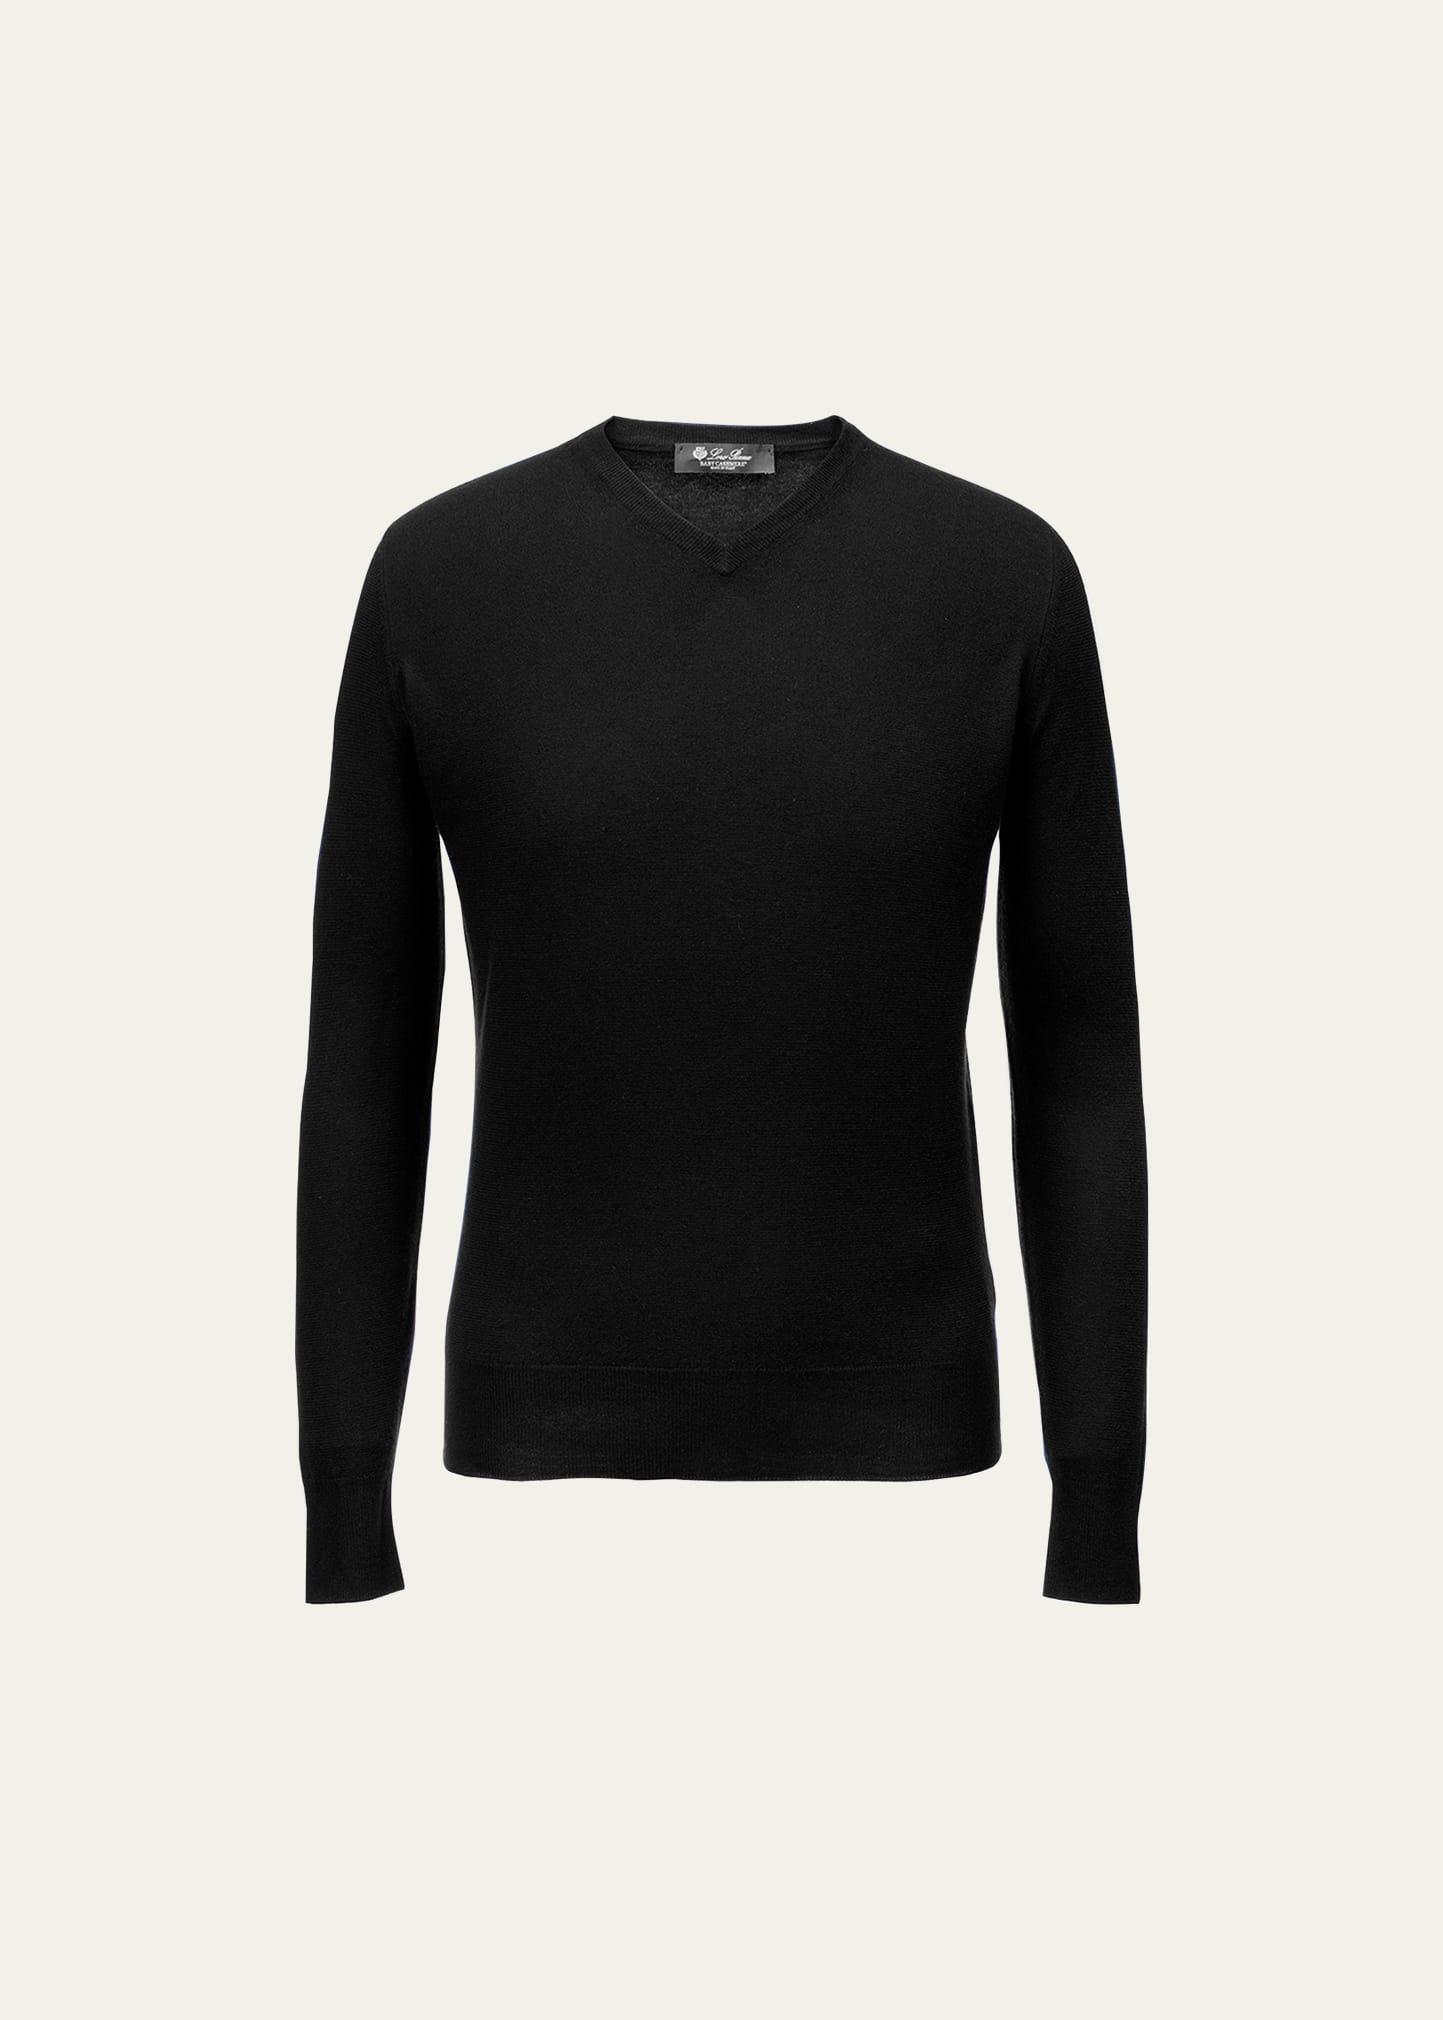 Mens Cashmere V-Neck Sweater Product Image